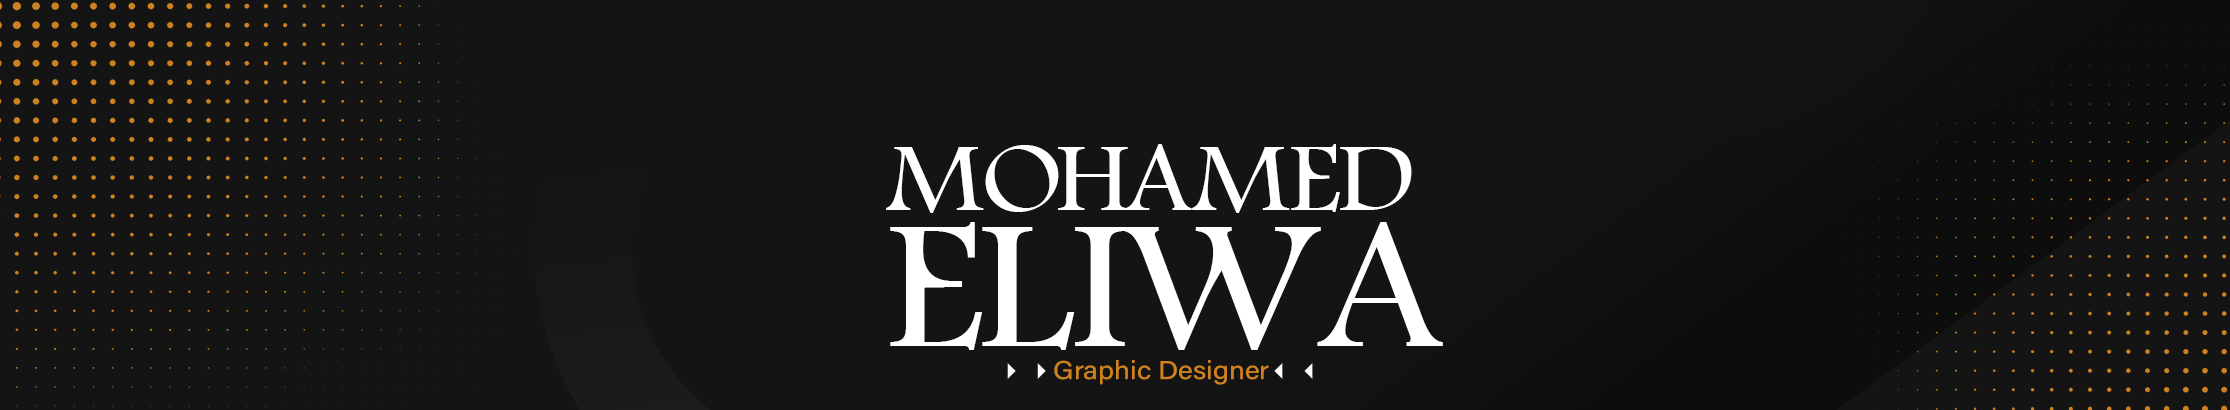 Mohamed Eliwas profilbanner